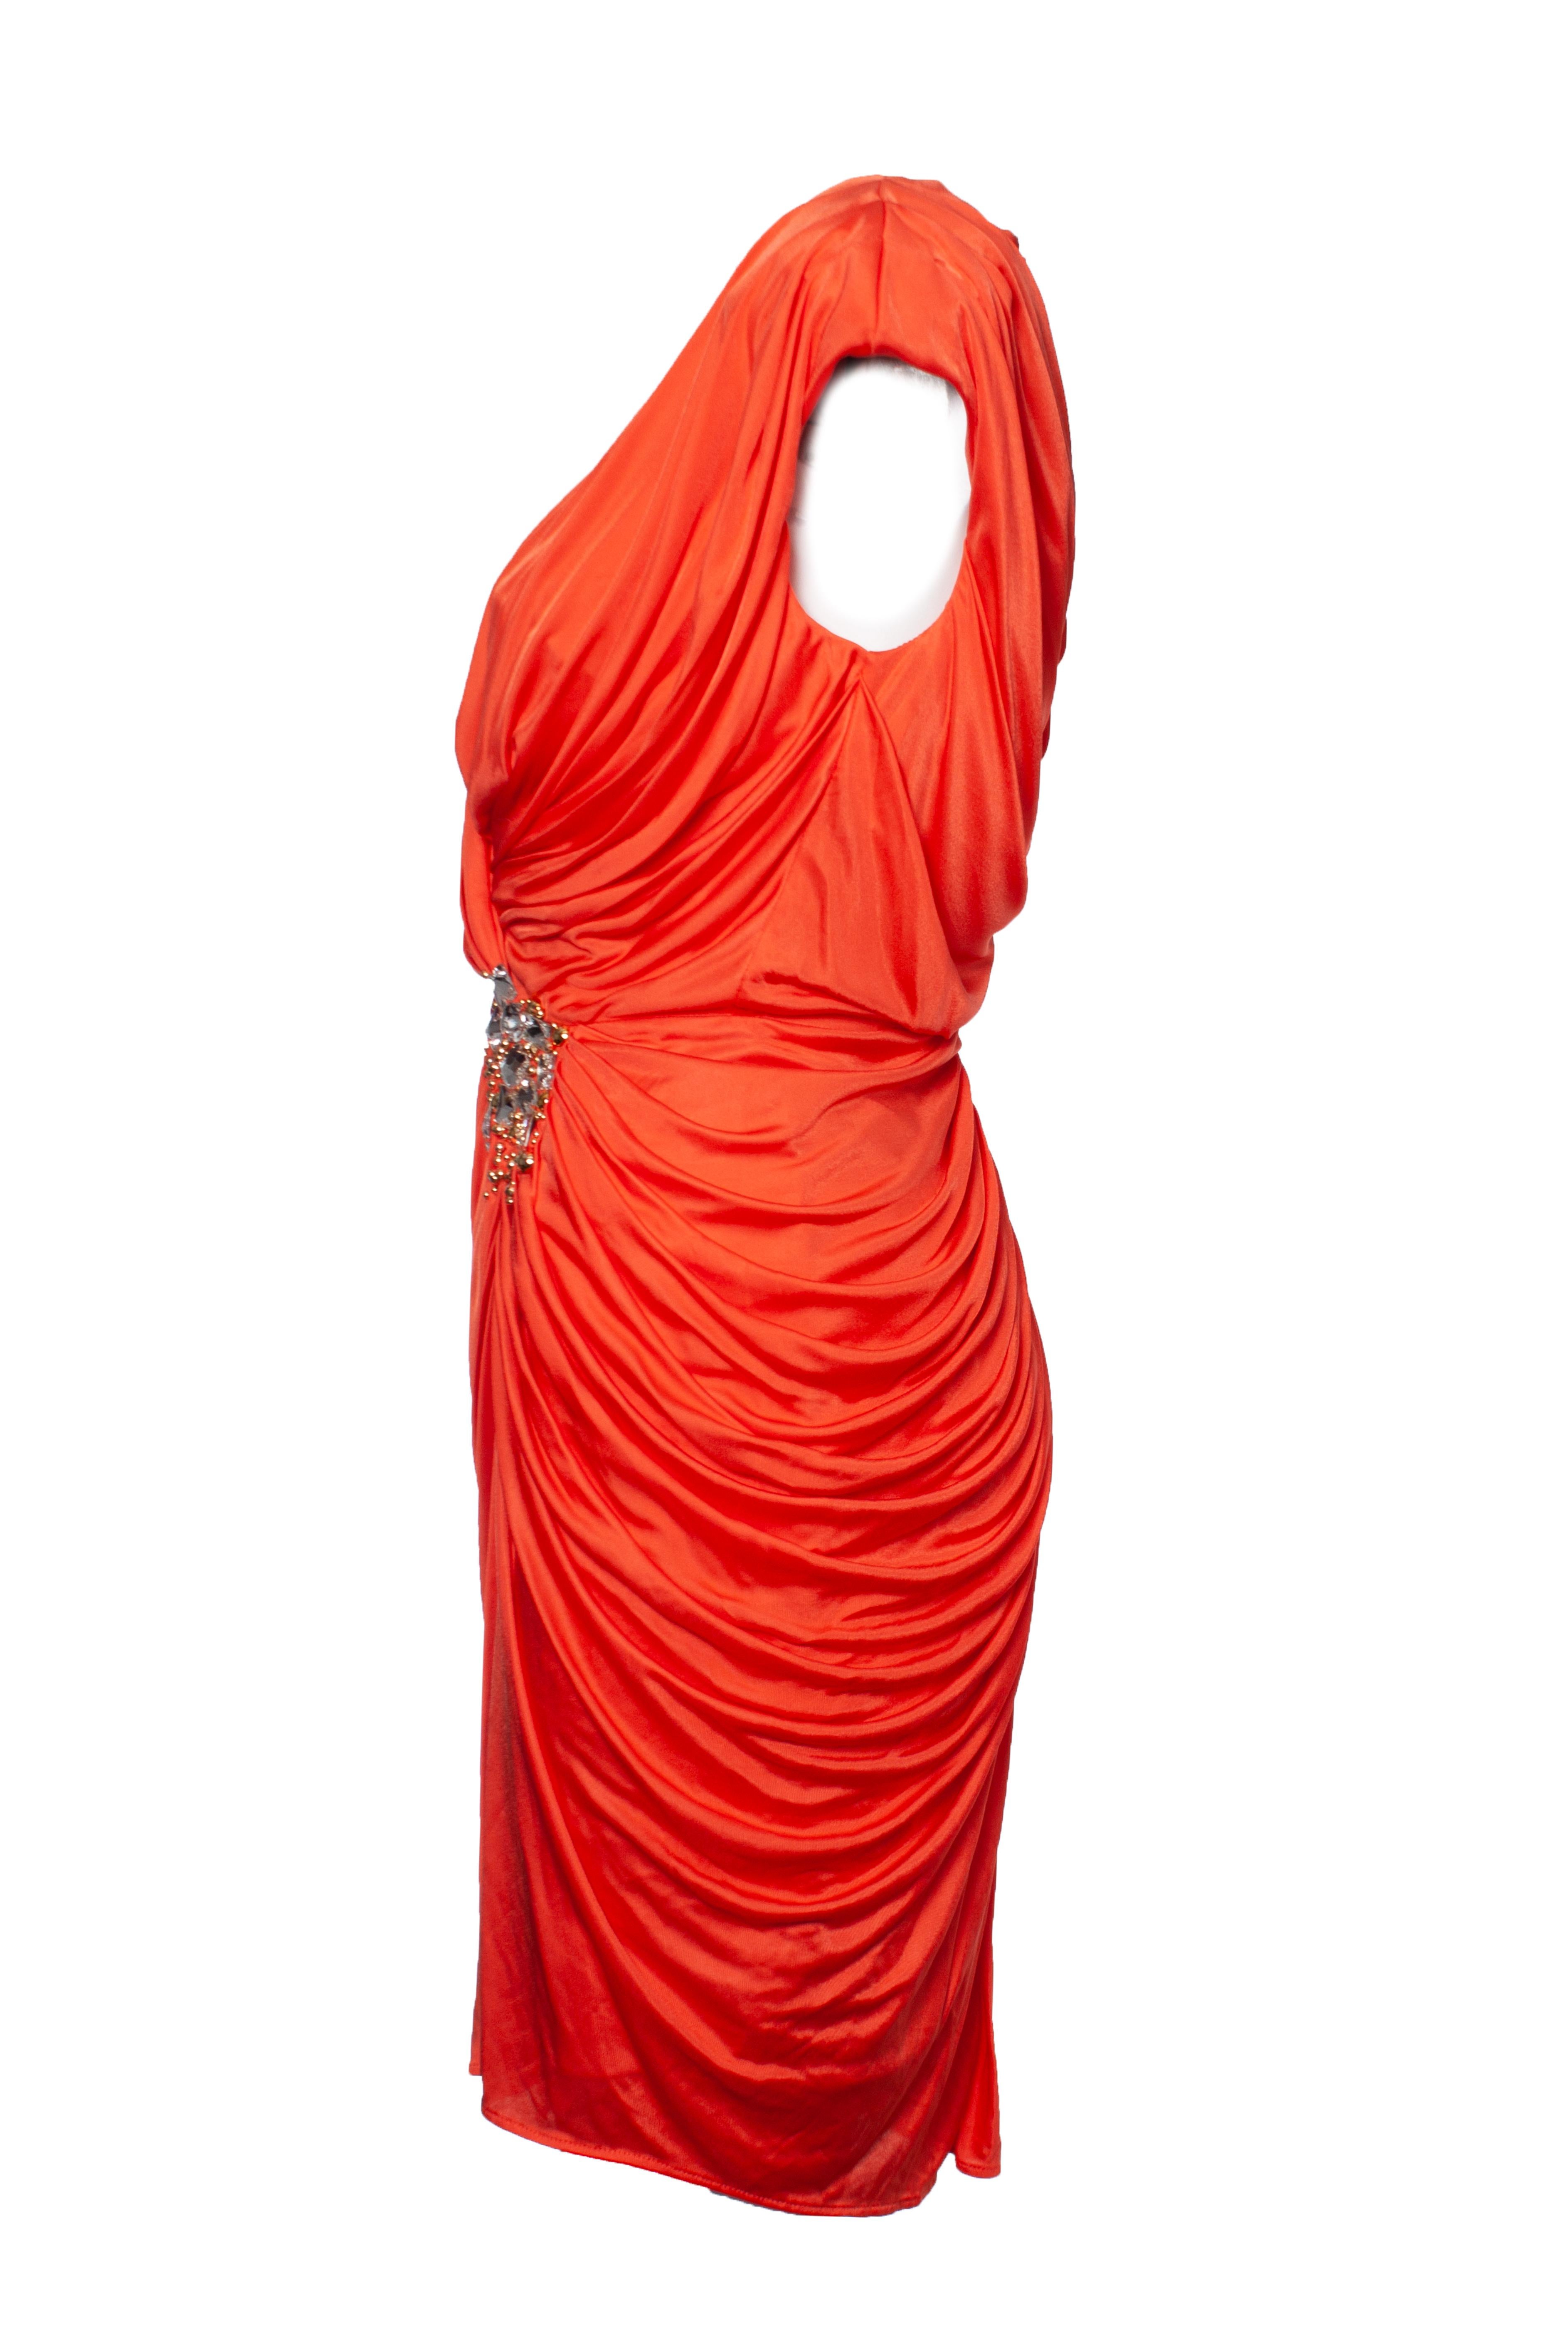 Rouge Blumarine, Robe drapée orange en vente